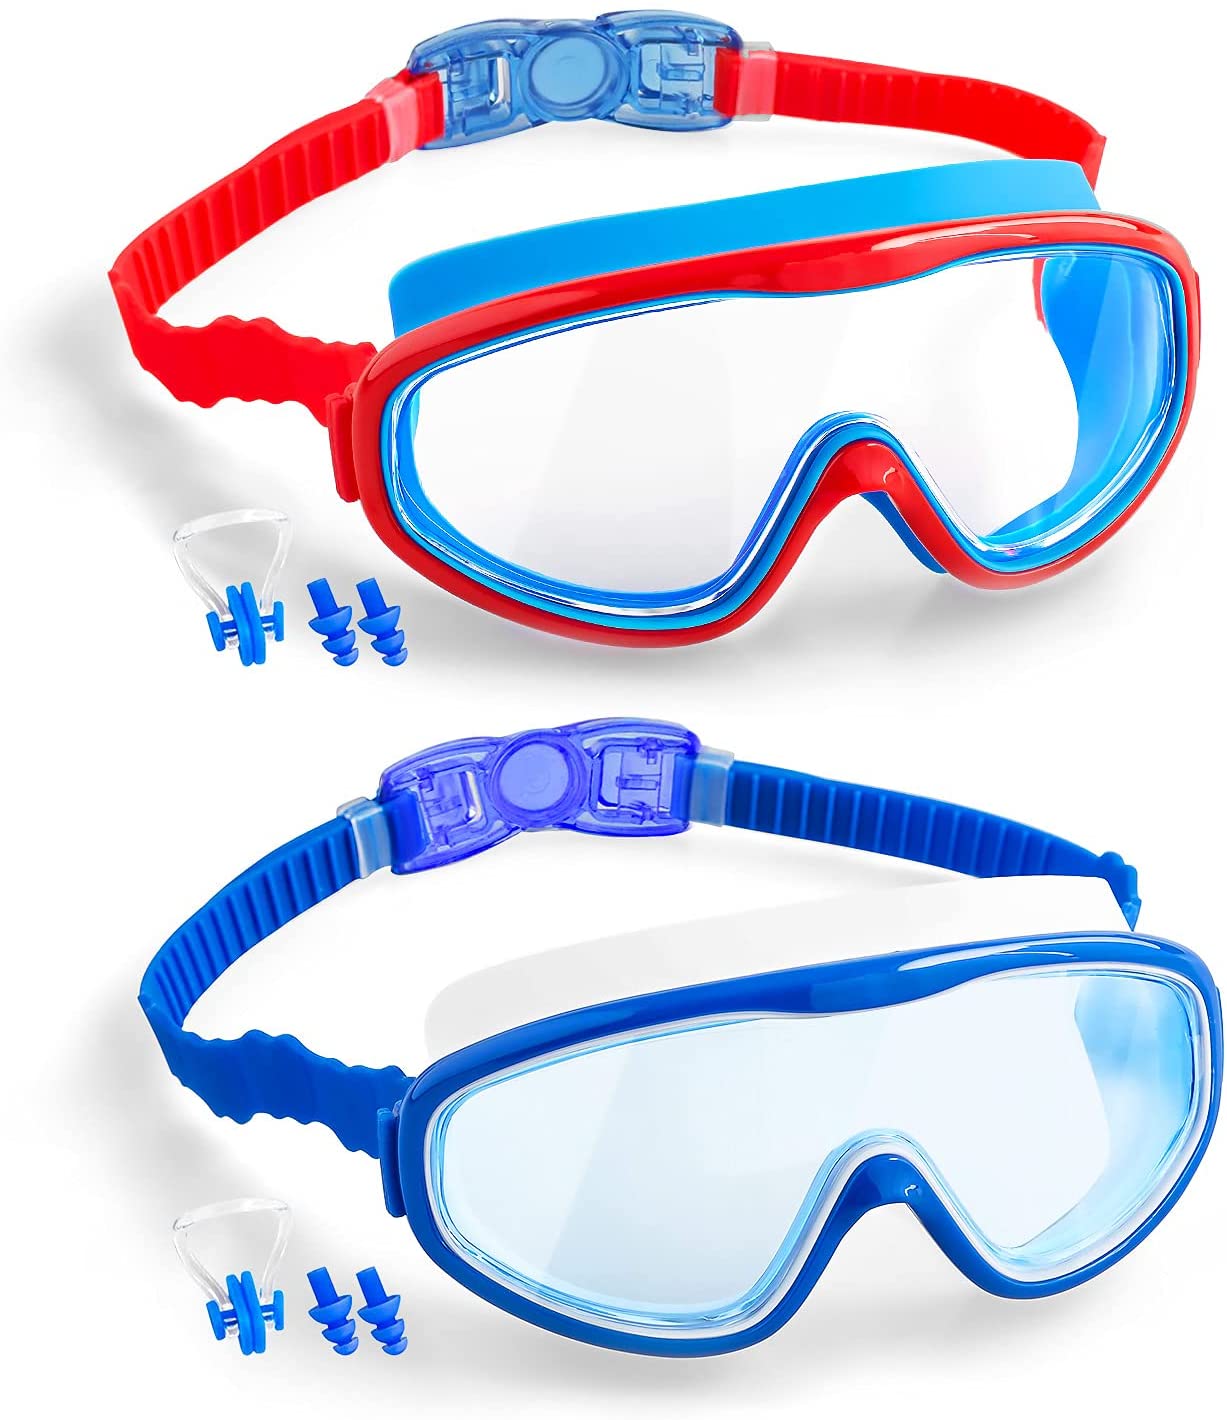 Elimoons Ergonomic Kids’ Swim Goggles, 2-Pack